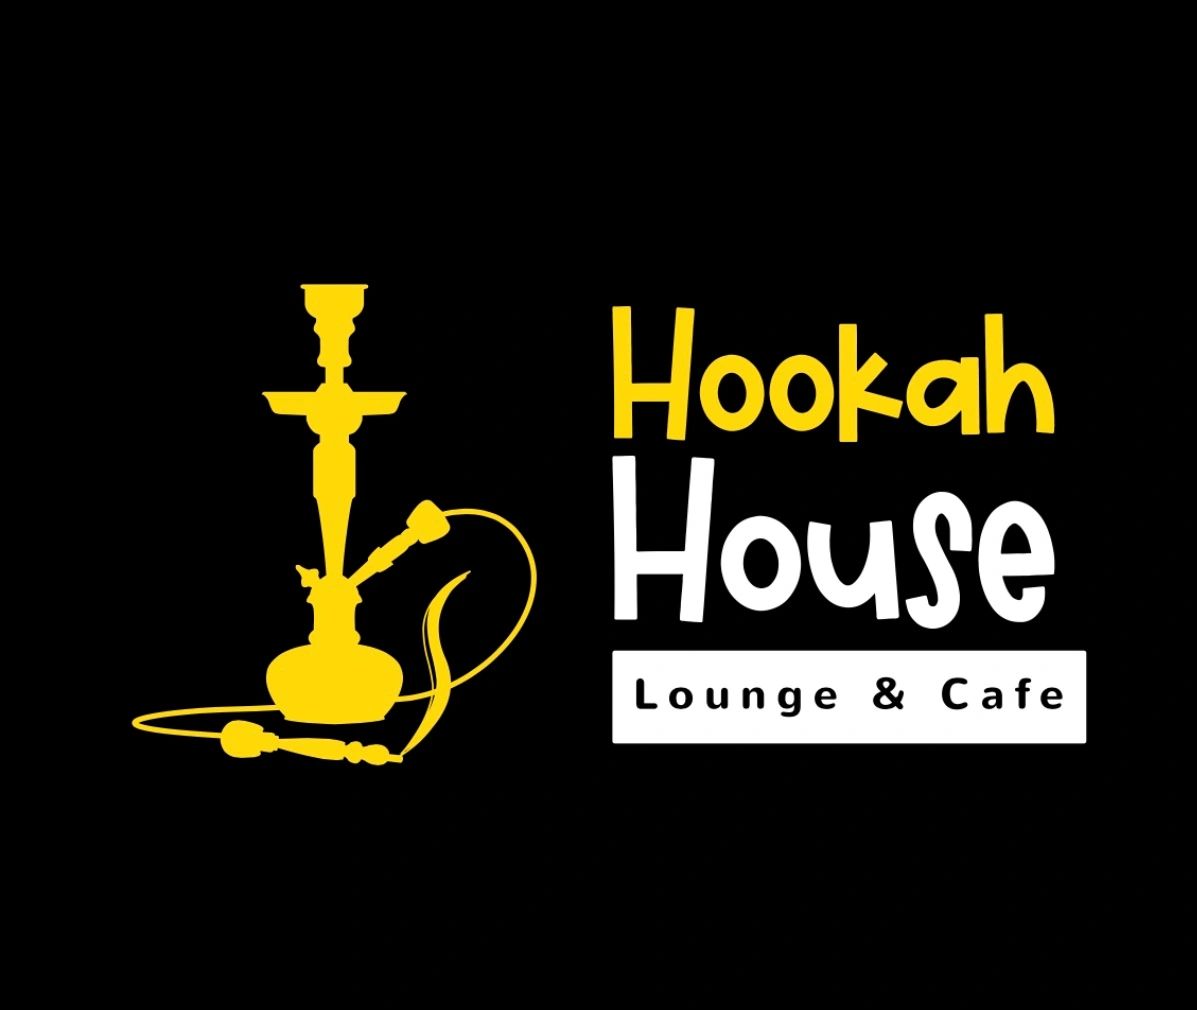 Hookah House Lounge & Cafe